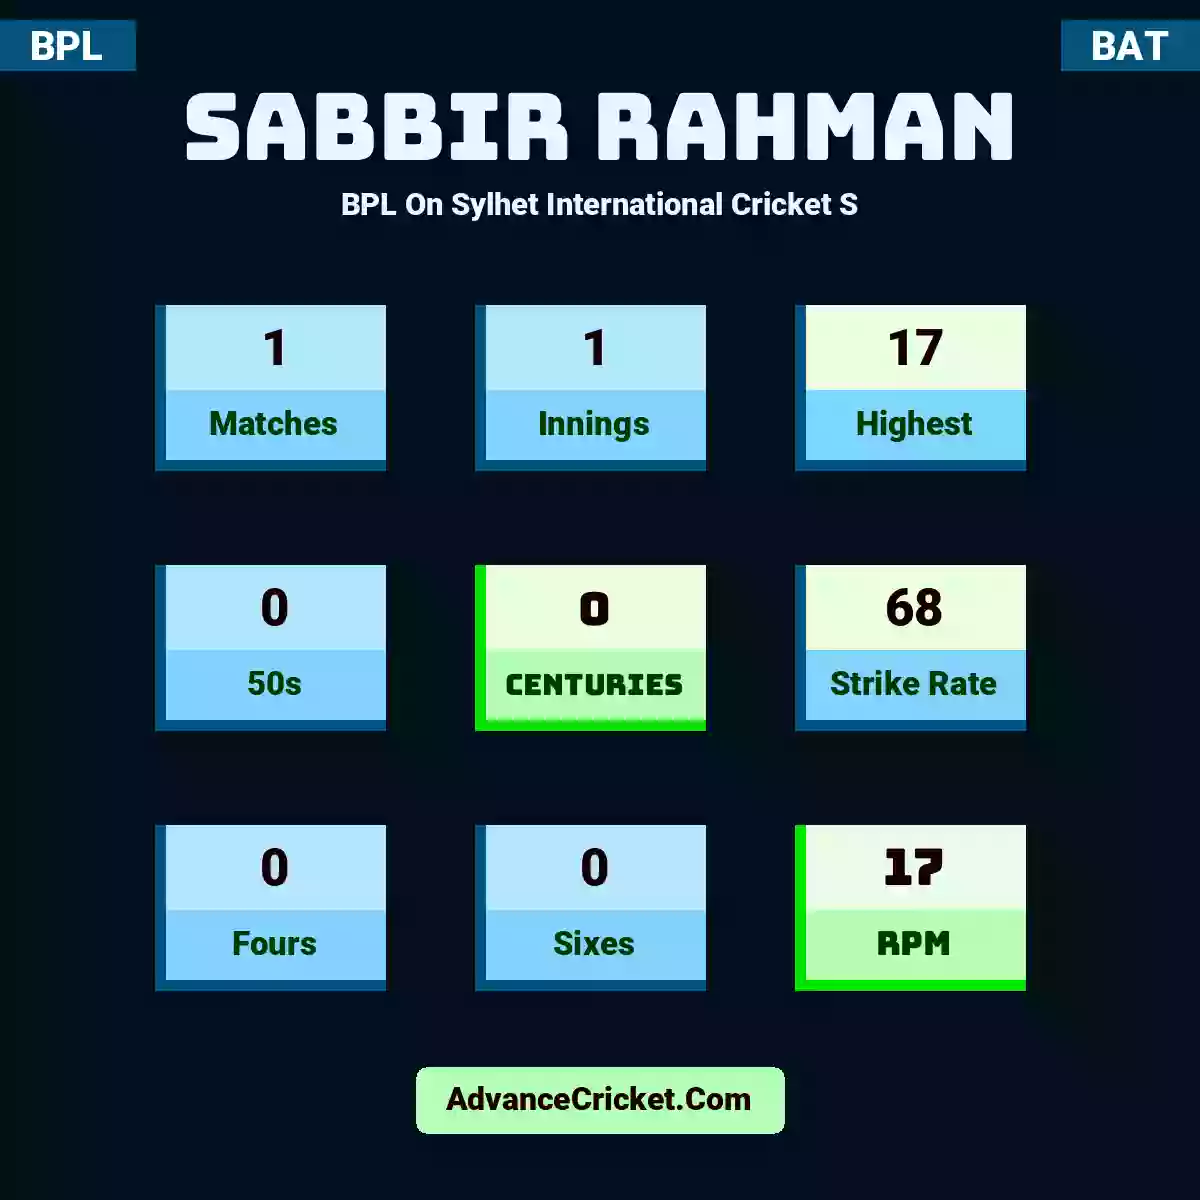 Sabbir Rahman BPL  On Sylhet International Cricket S, Sabbir Rahman played 1 matches, scored 17 runs as highest, 0 half-centuries, and 0 centuries, with a strike rate of 68. S.Rahman hit 0 fours and 0 sixes, with an RPM of 17.